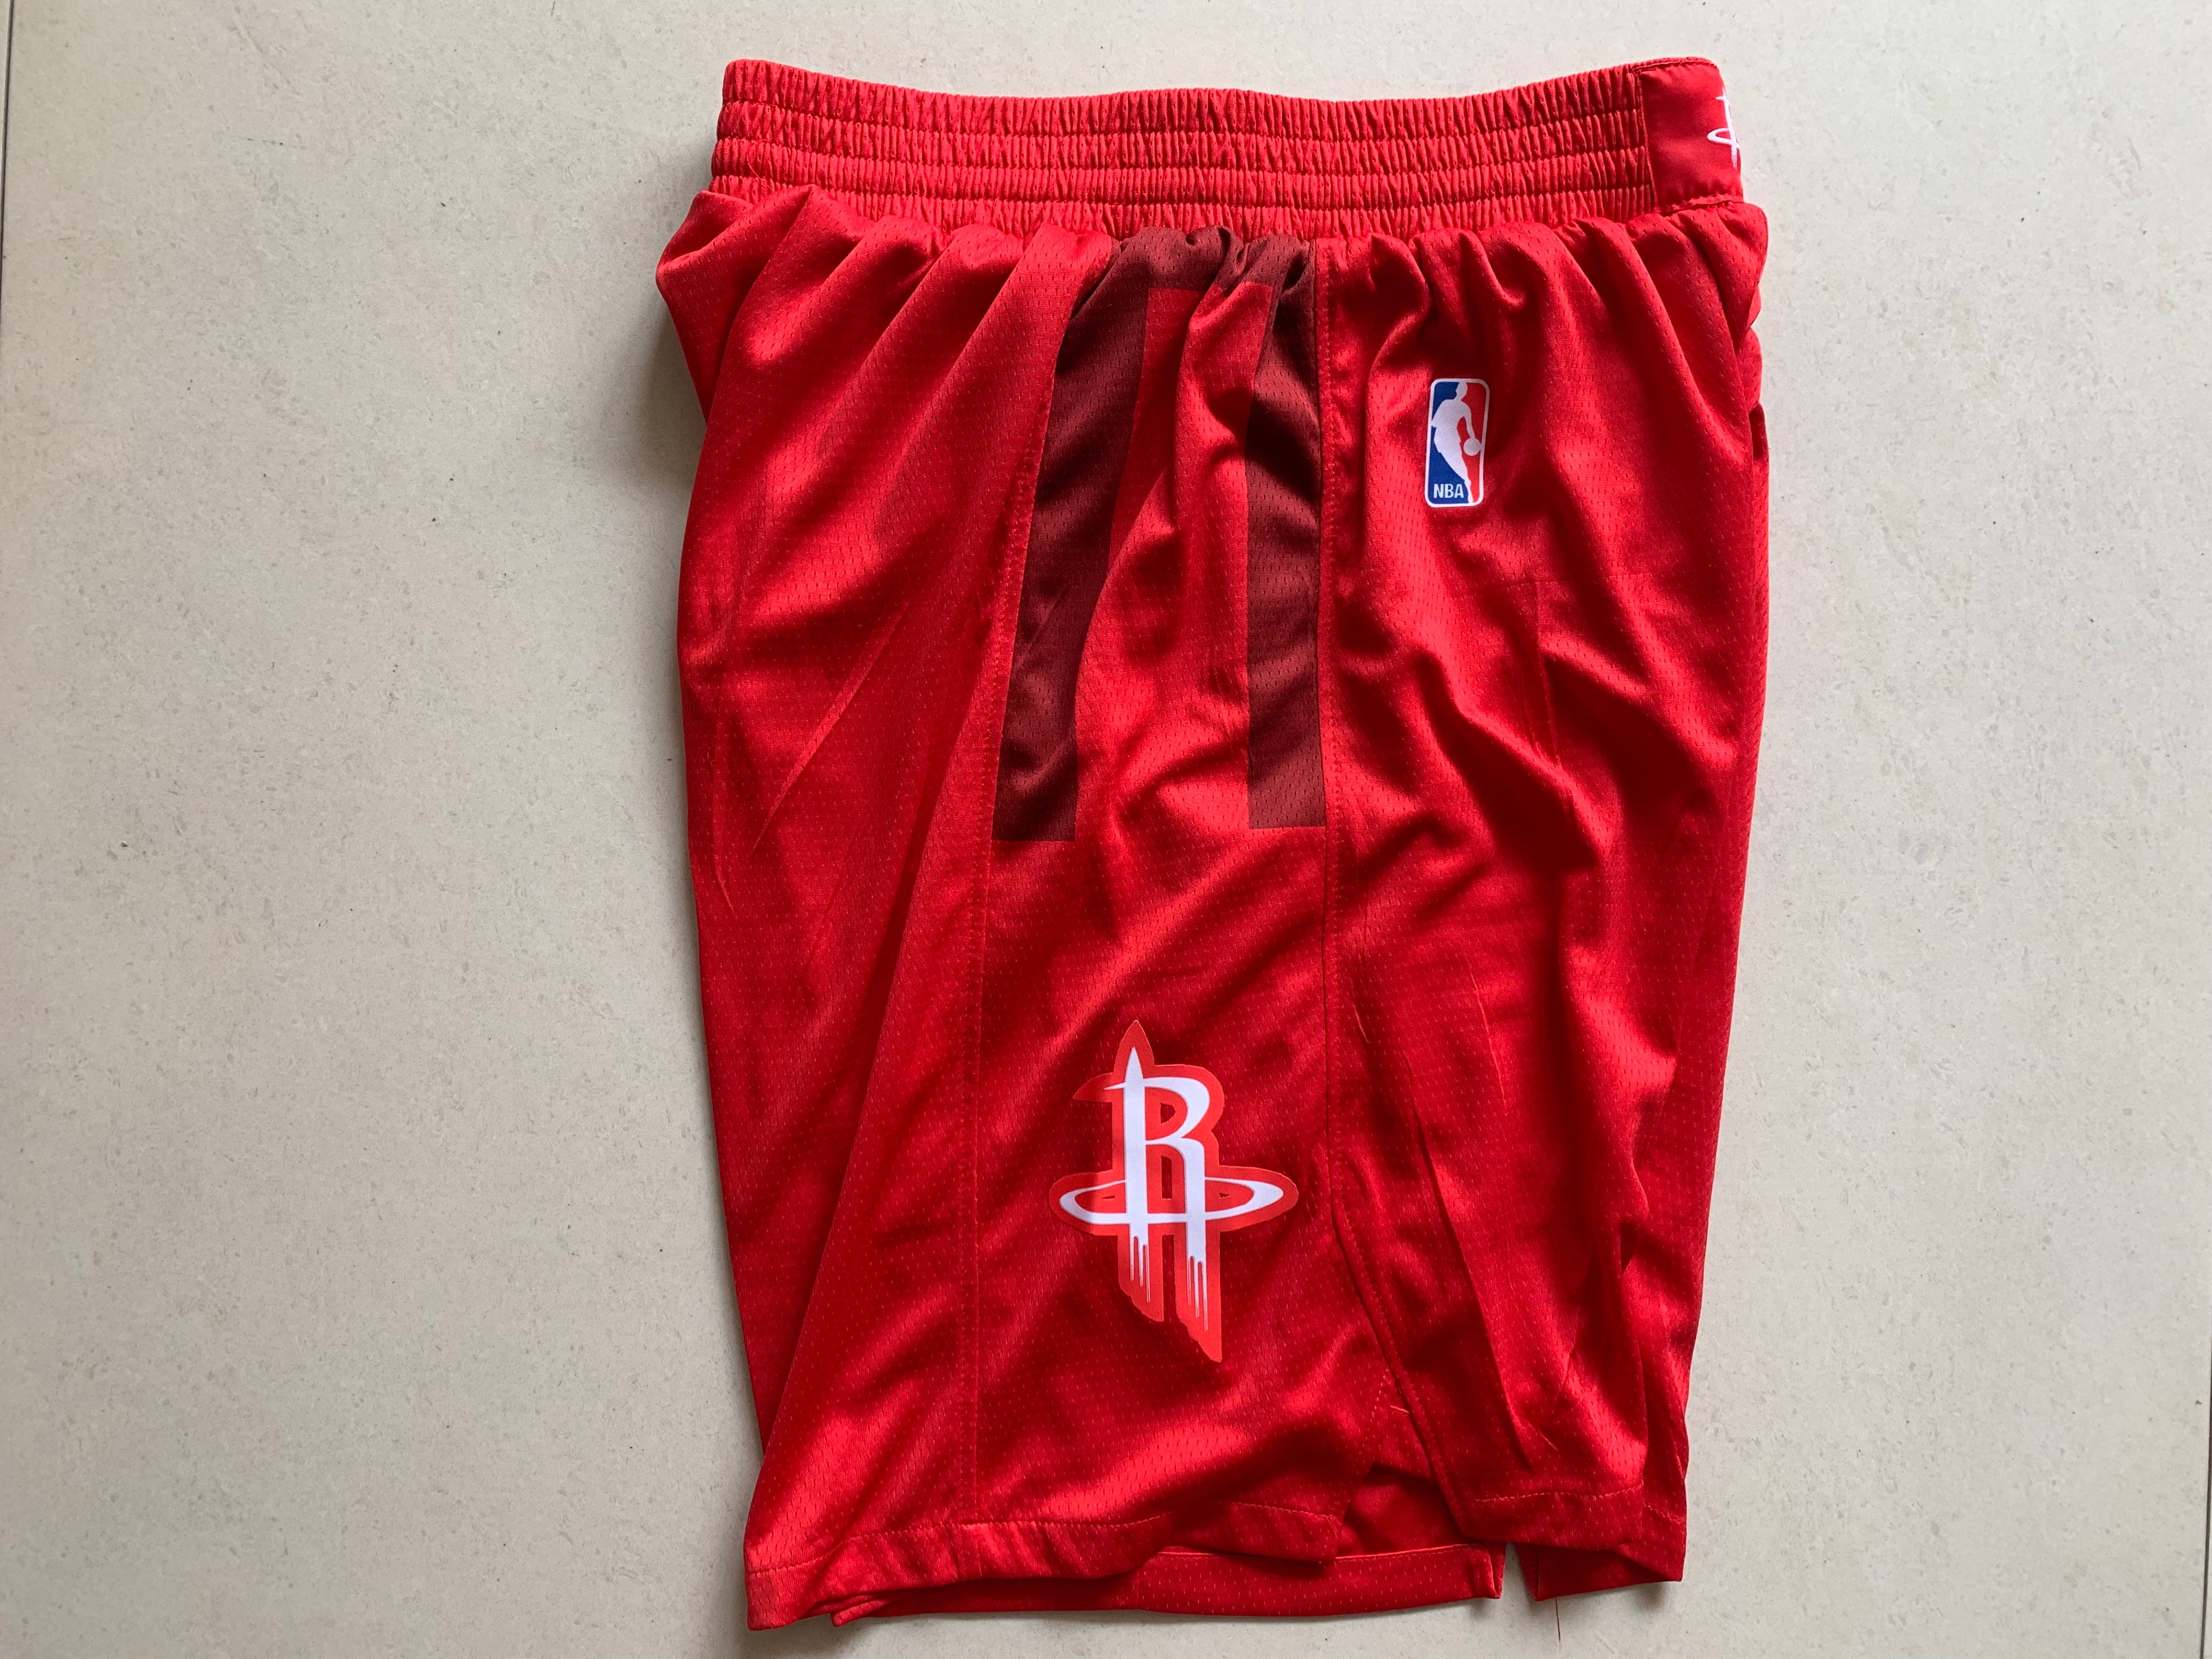 Rocket reward red shorts